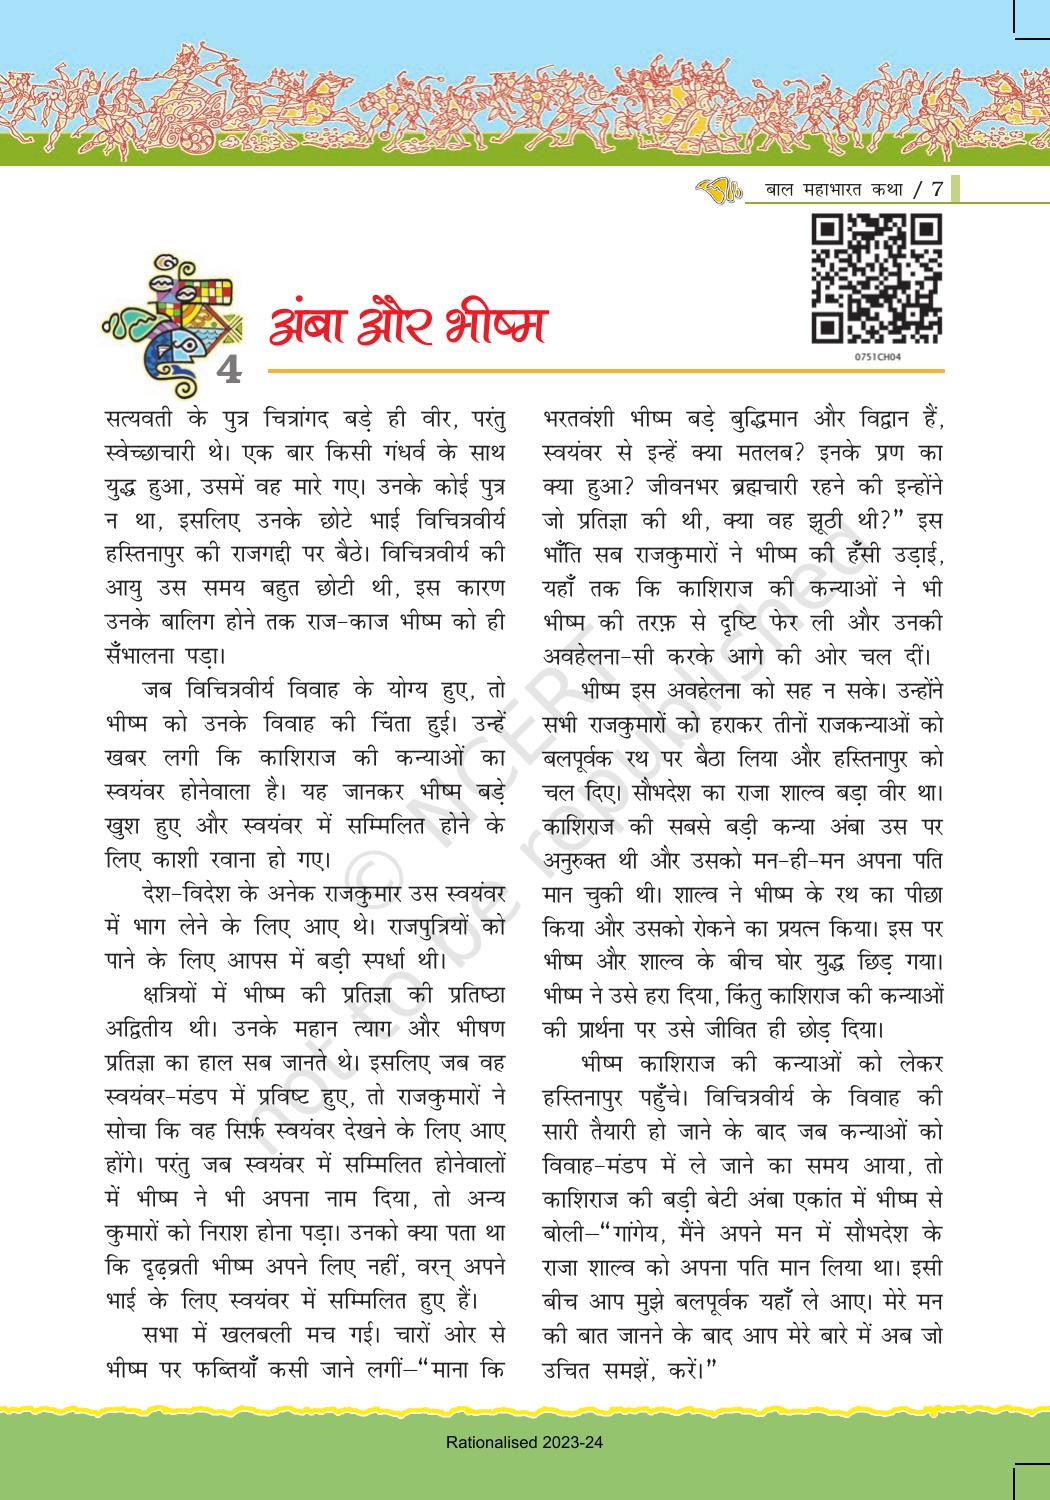 NCERT Book for Class 7 Hindi: Chapter 1-बाल महाभारत कथा - Page 7